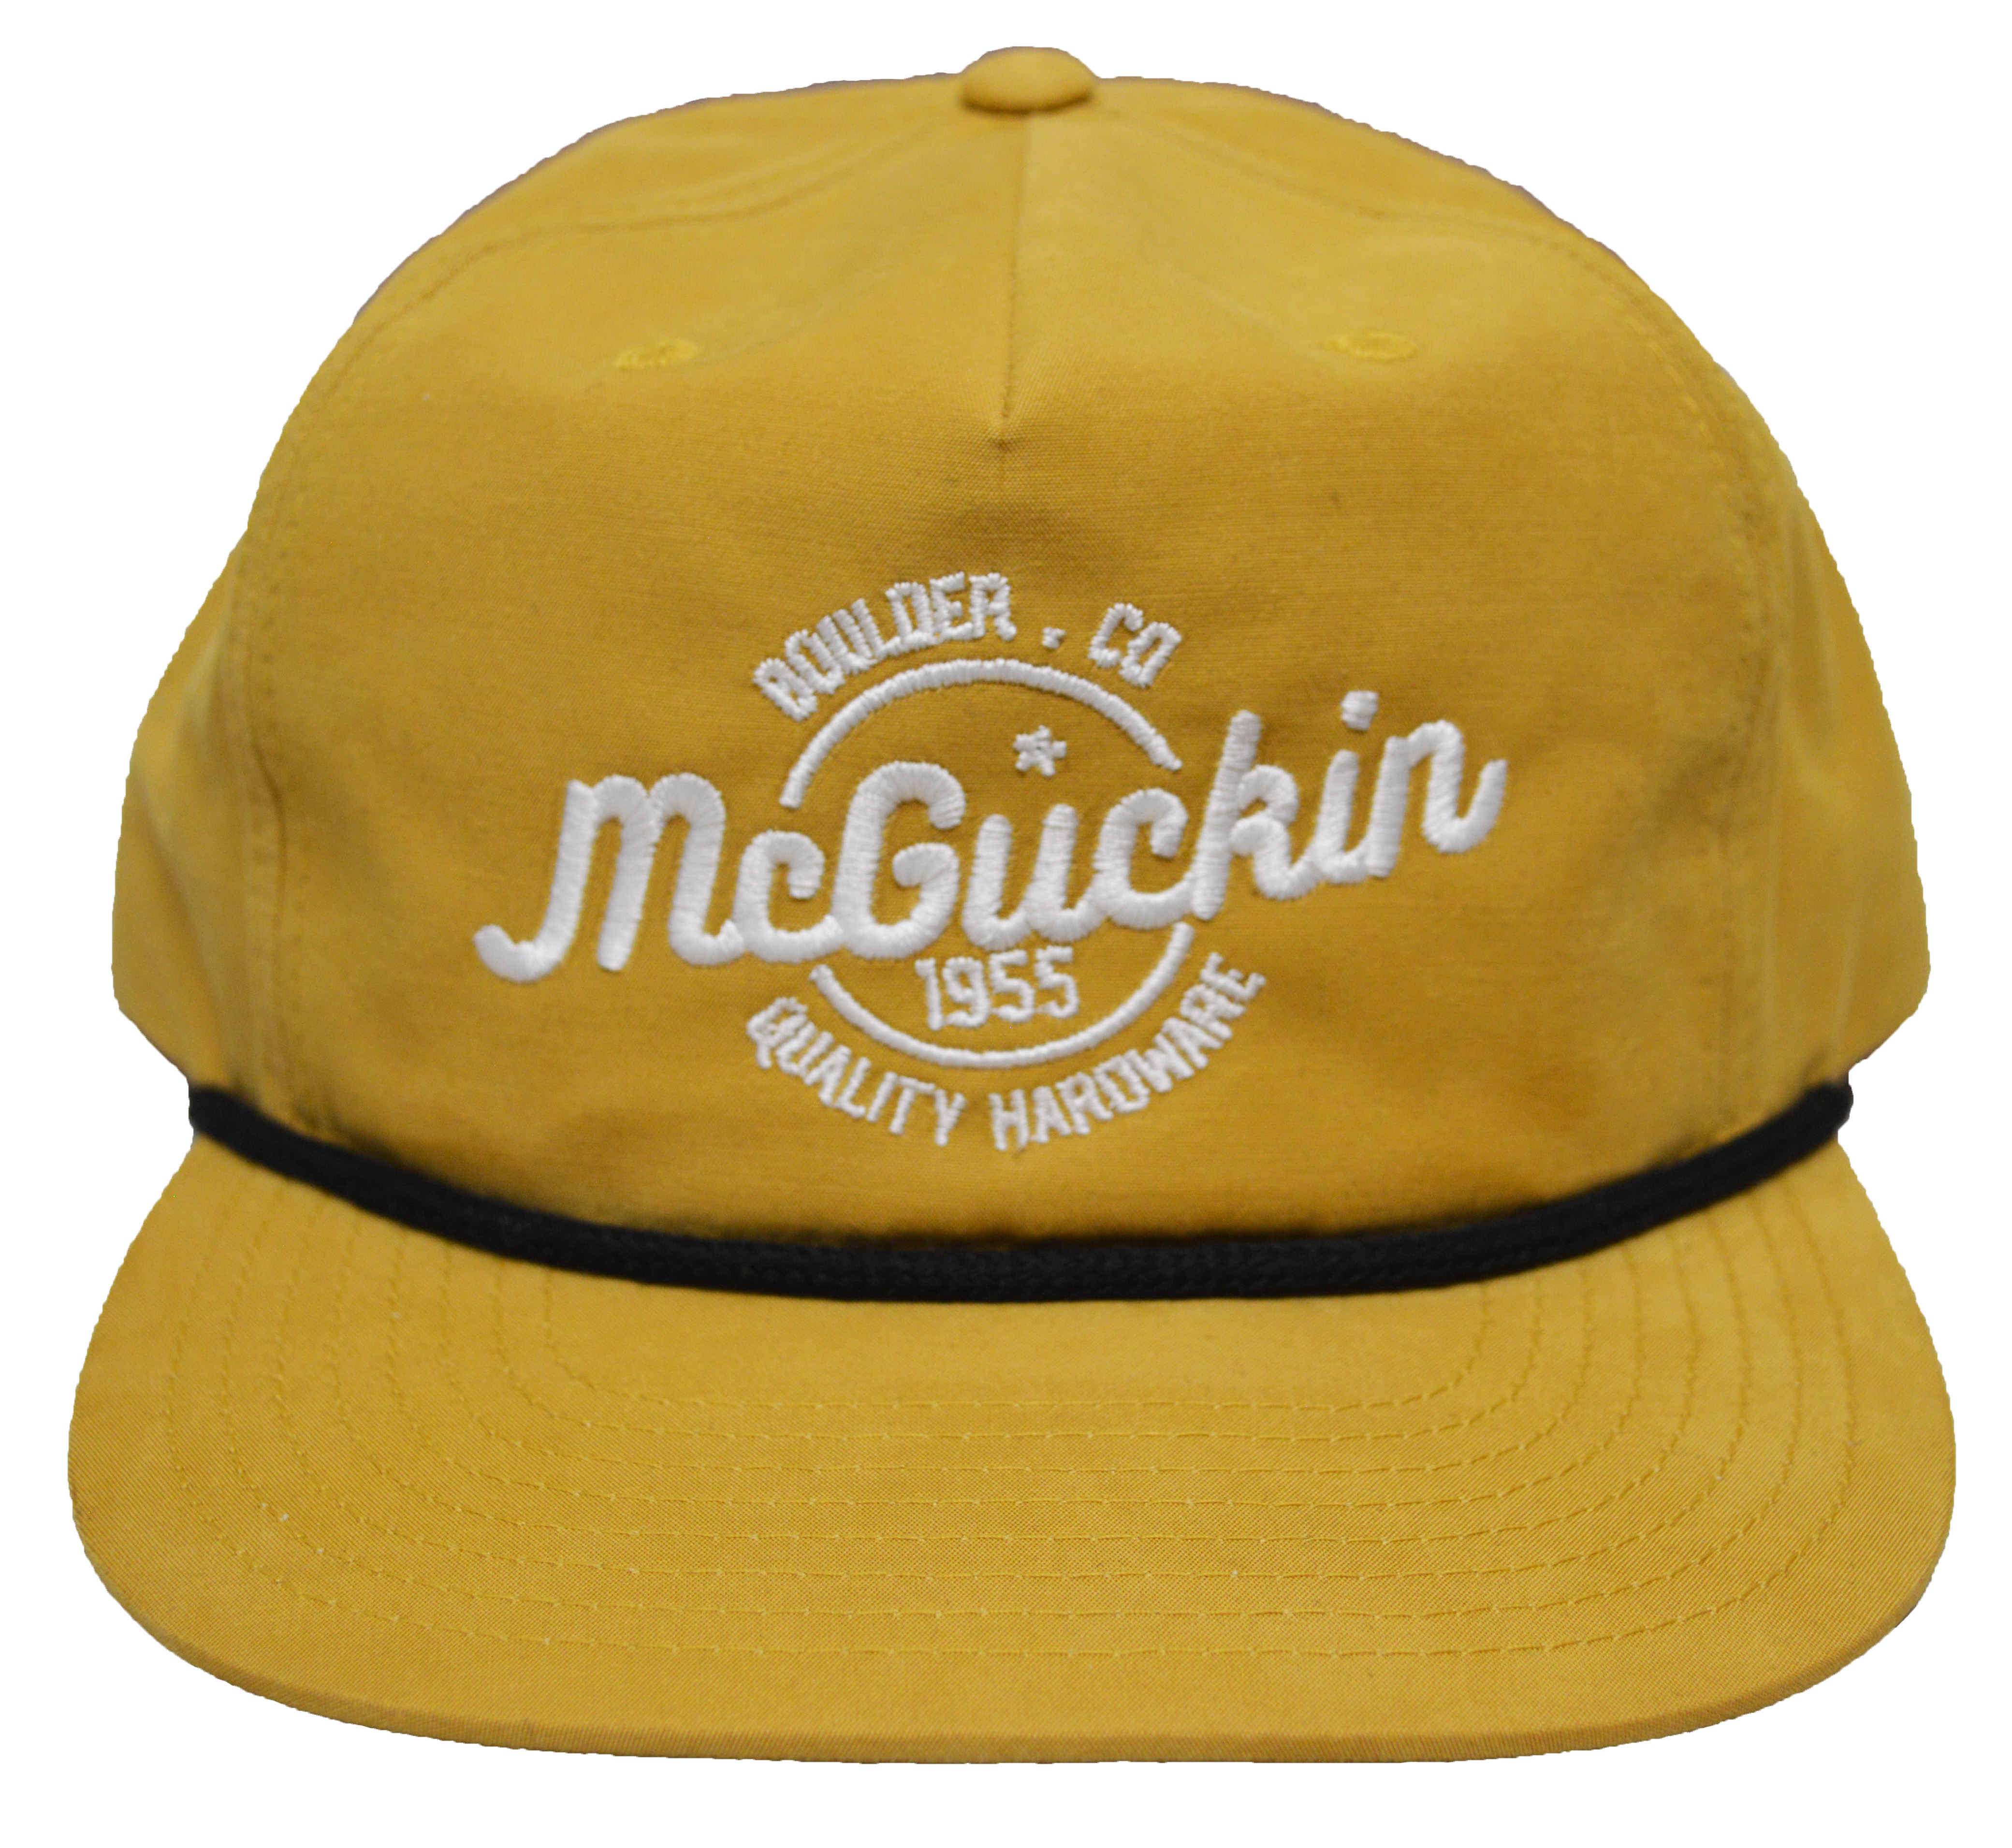 McGuckin Pinch Front Hat Biscuit - 1